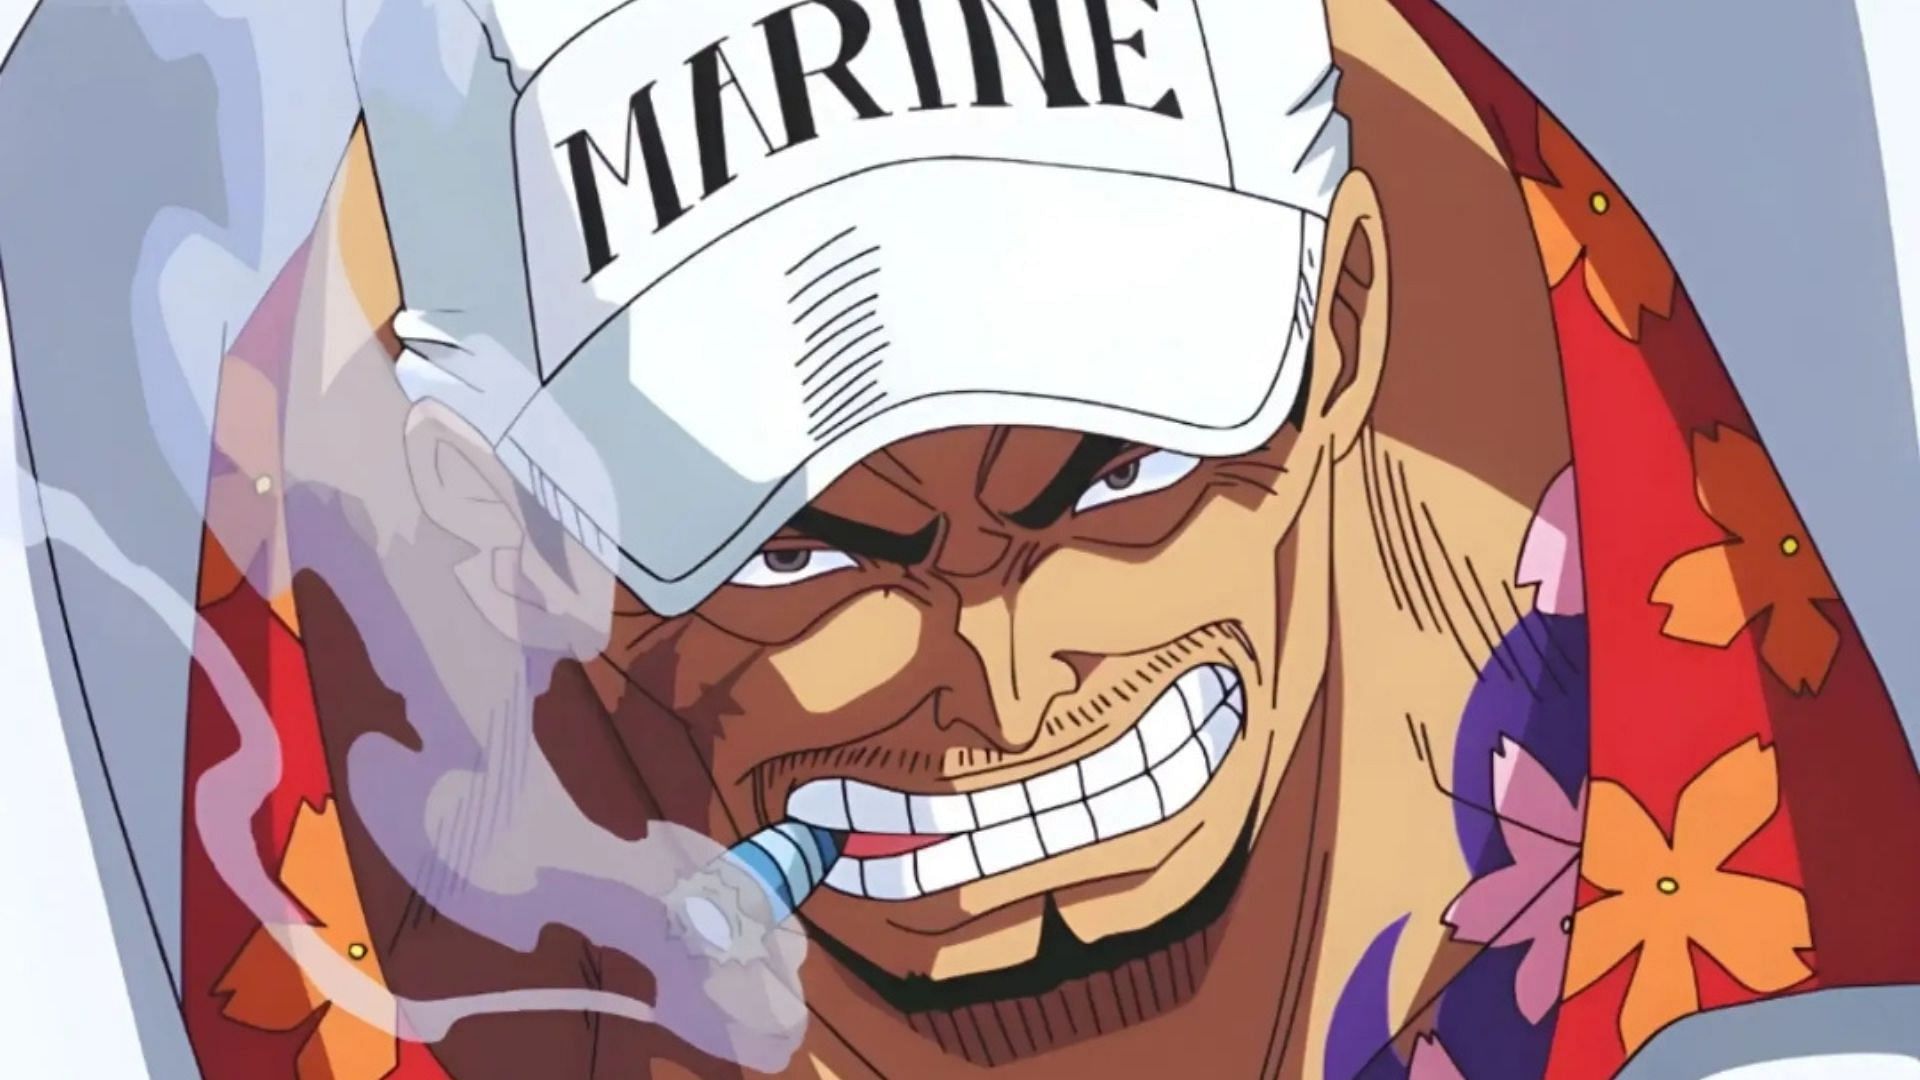 Akainu as seen in the anime One Piece (Image via Toei Animation)